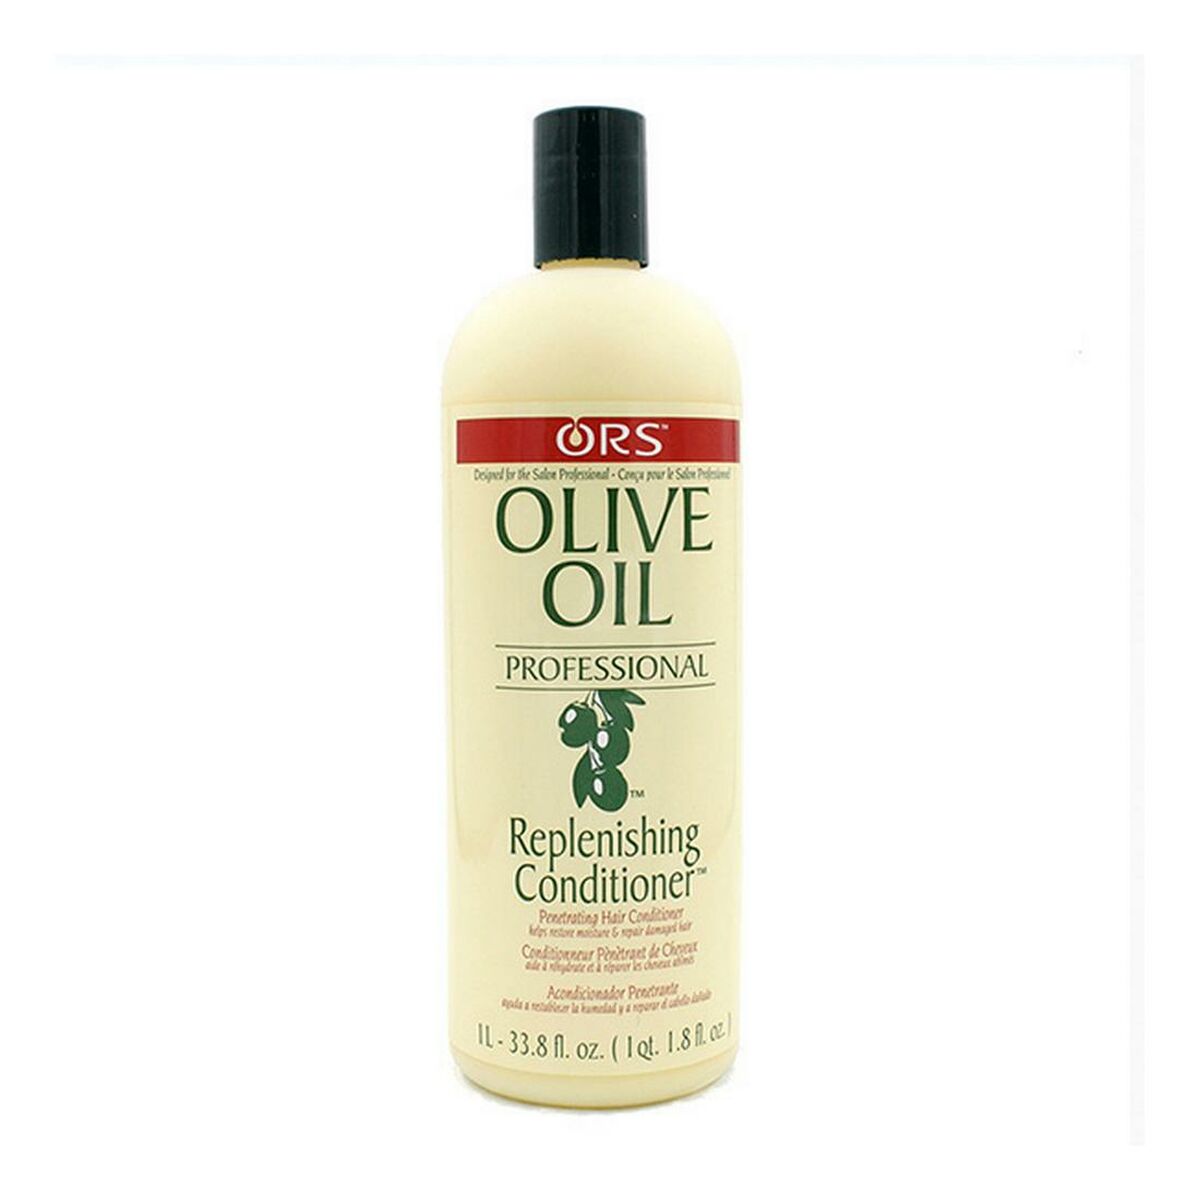 Conditioner Ors Replenishing Olive Oil - JOSEPH BEAUTY